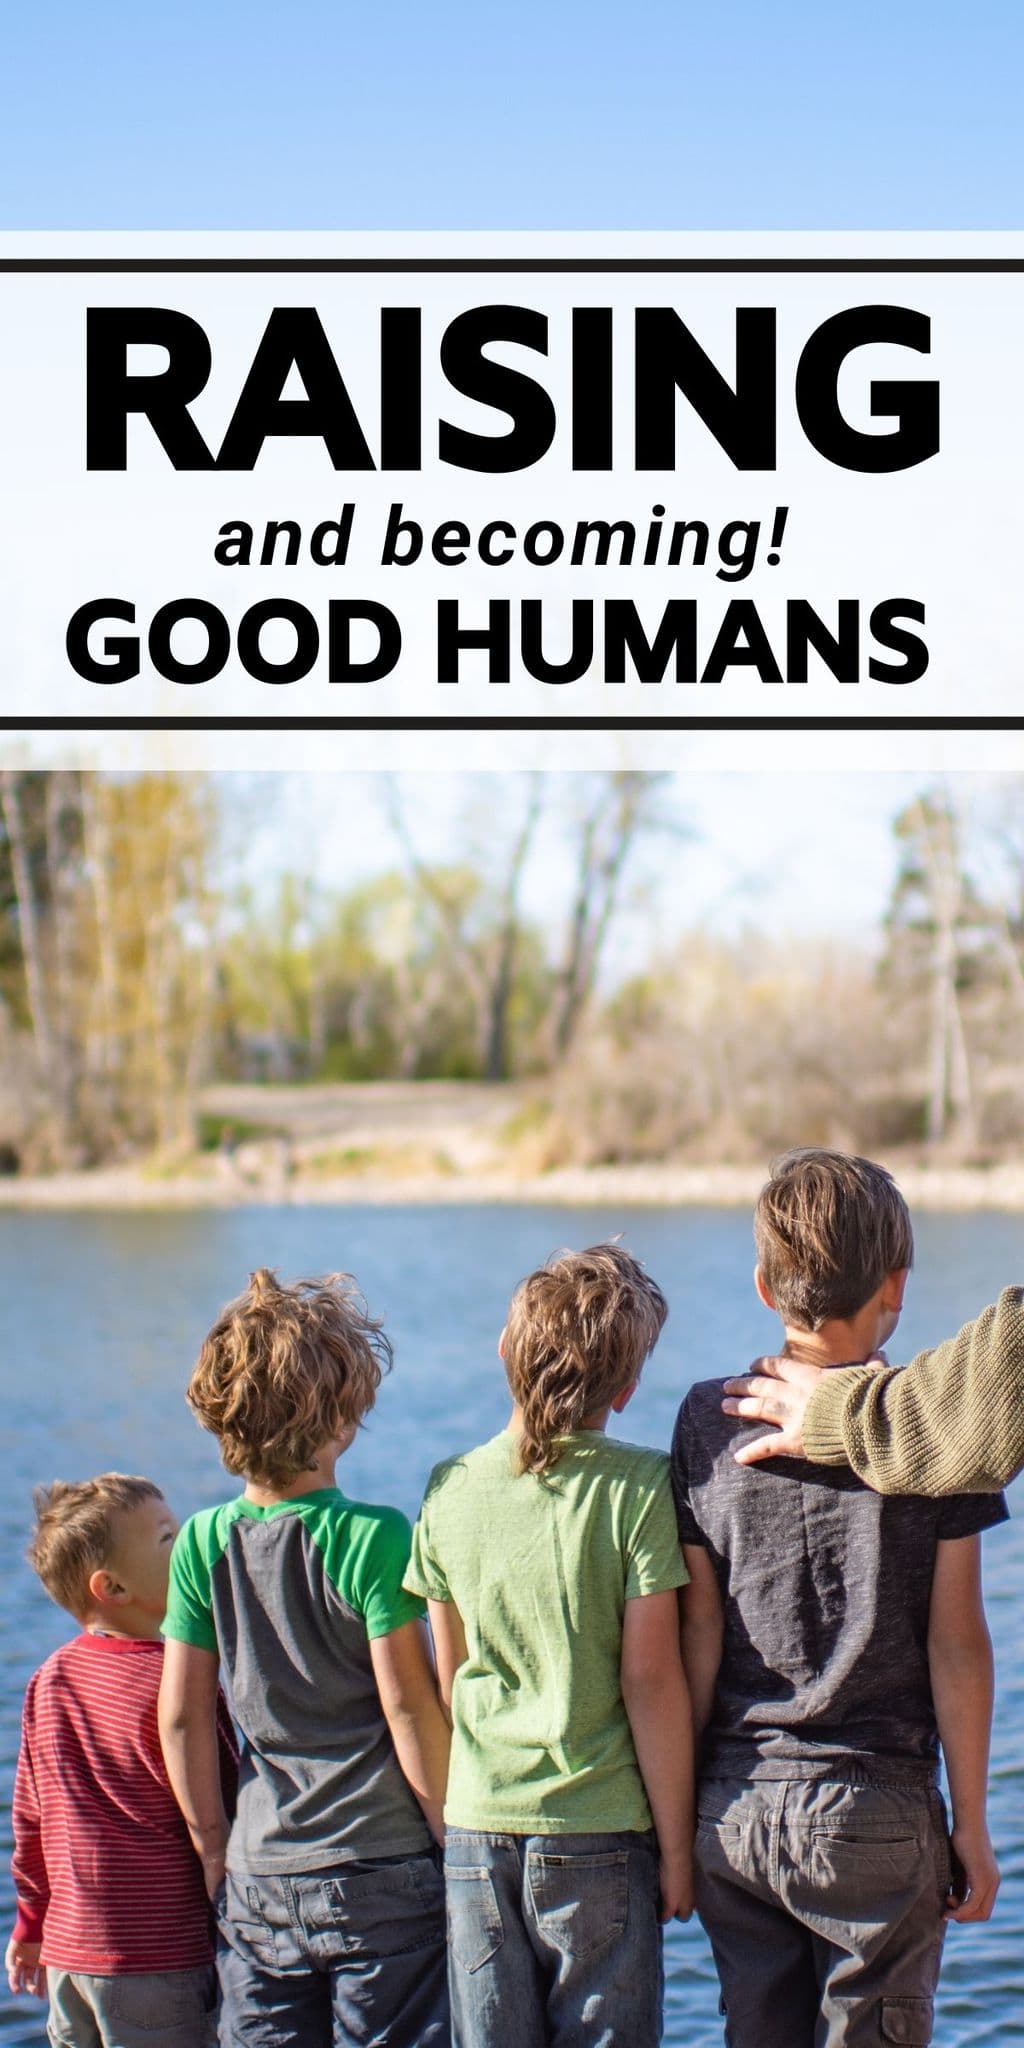 Raising good humans